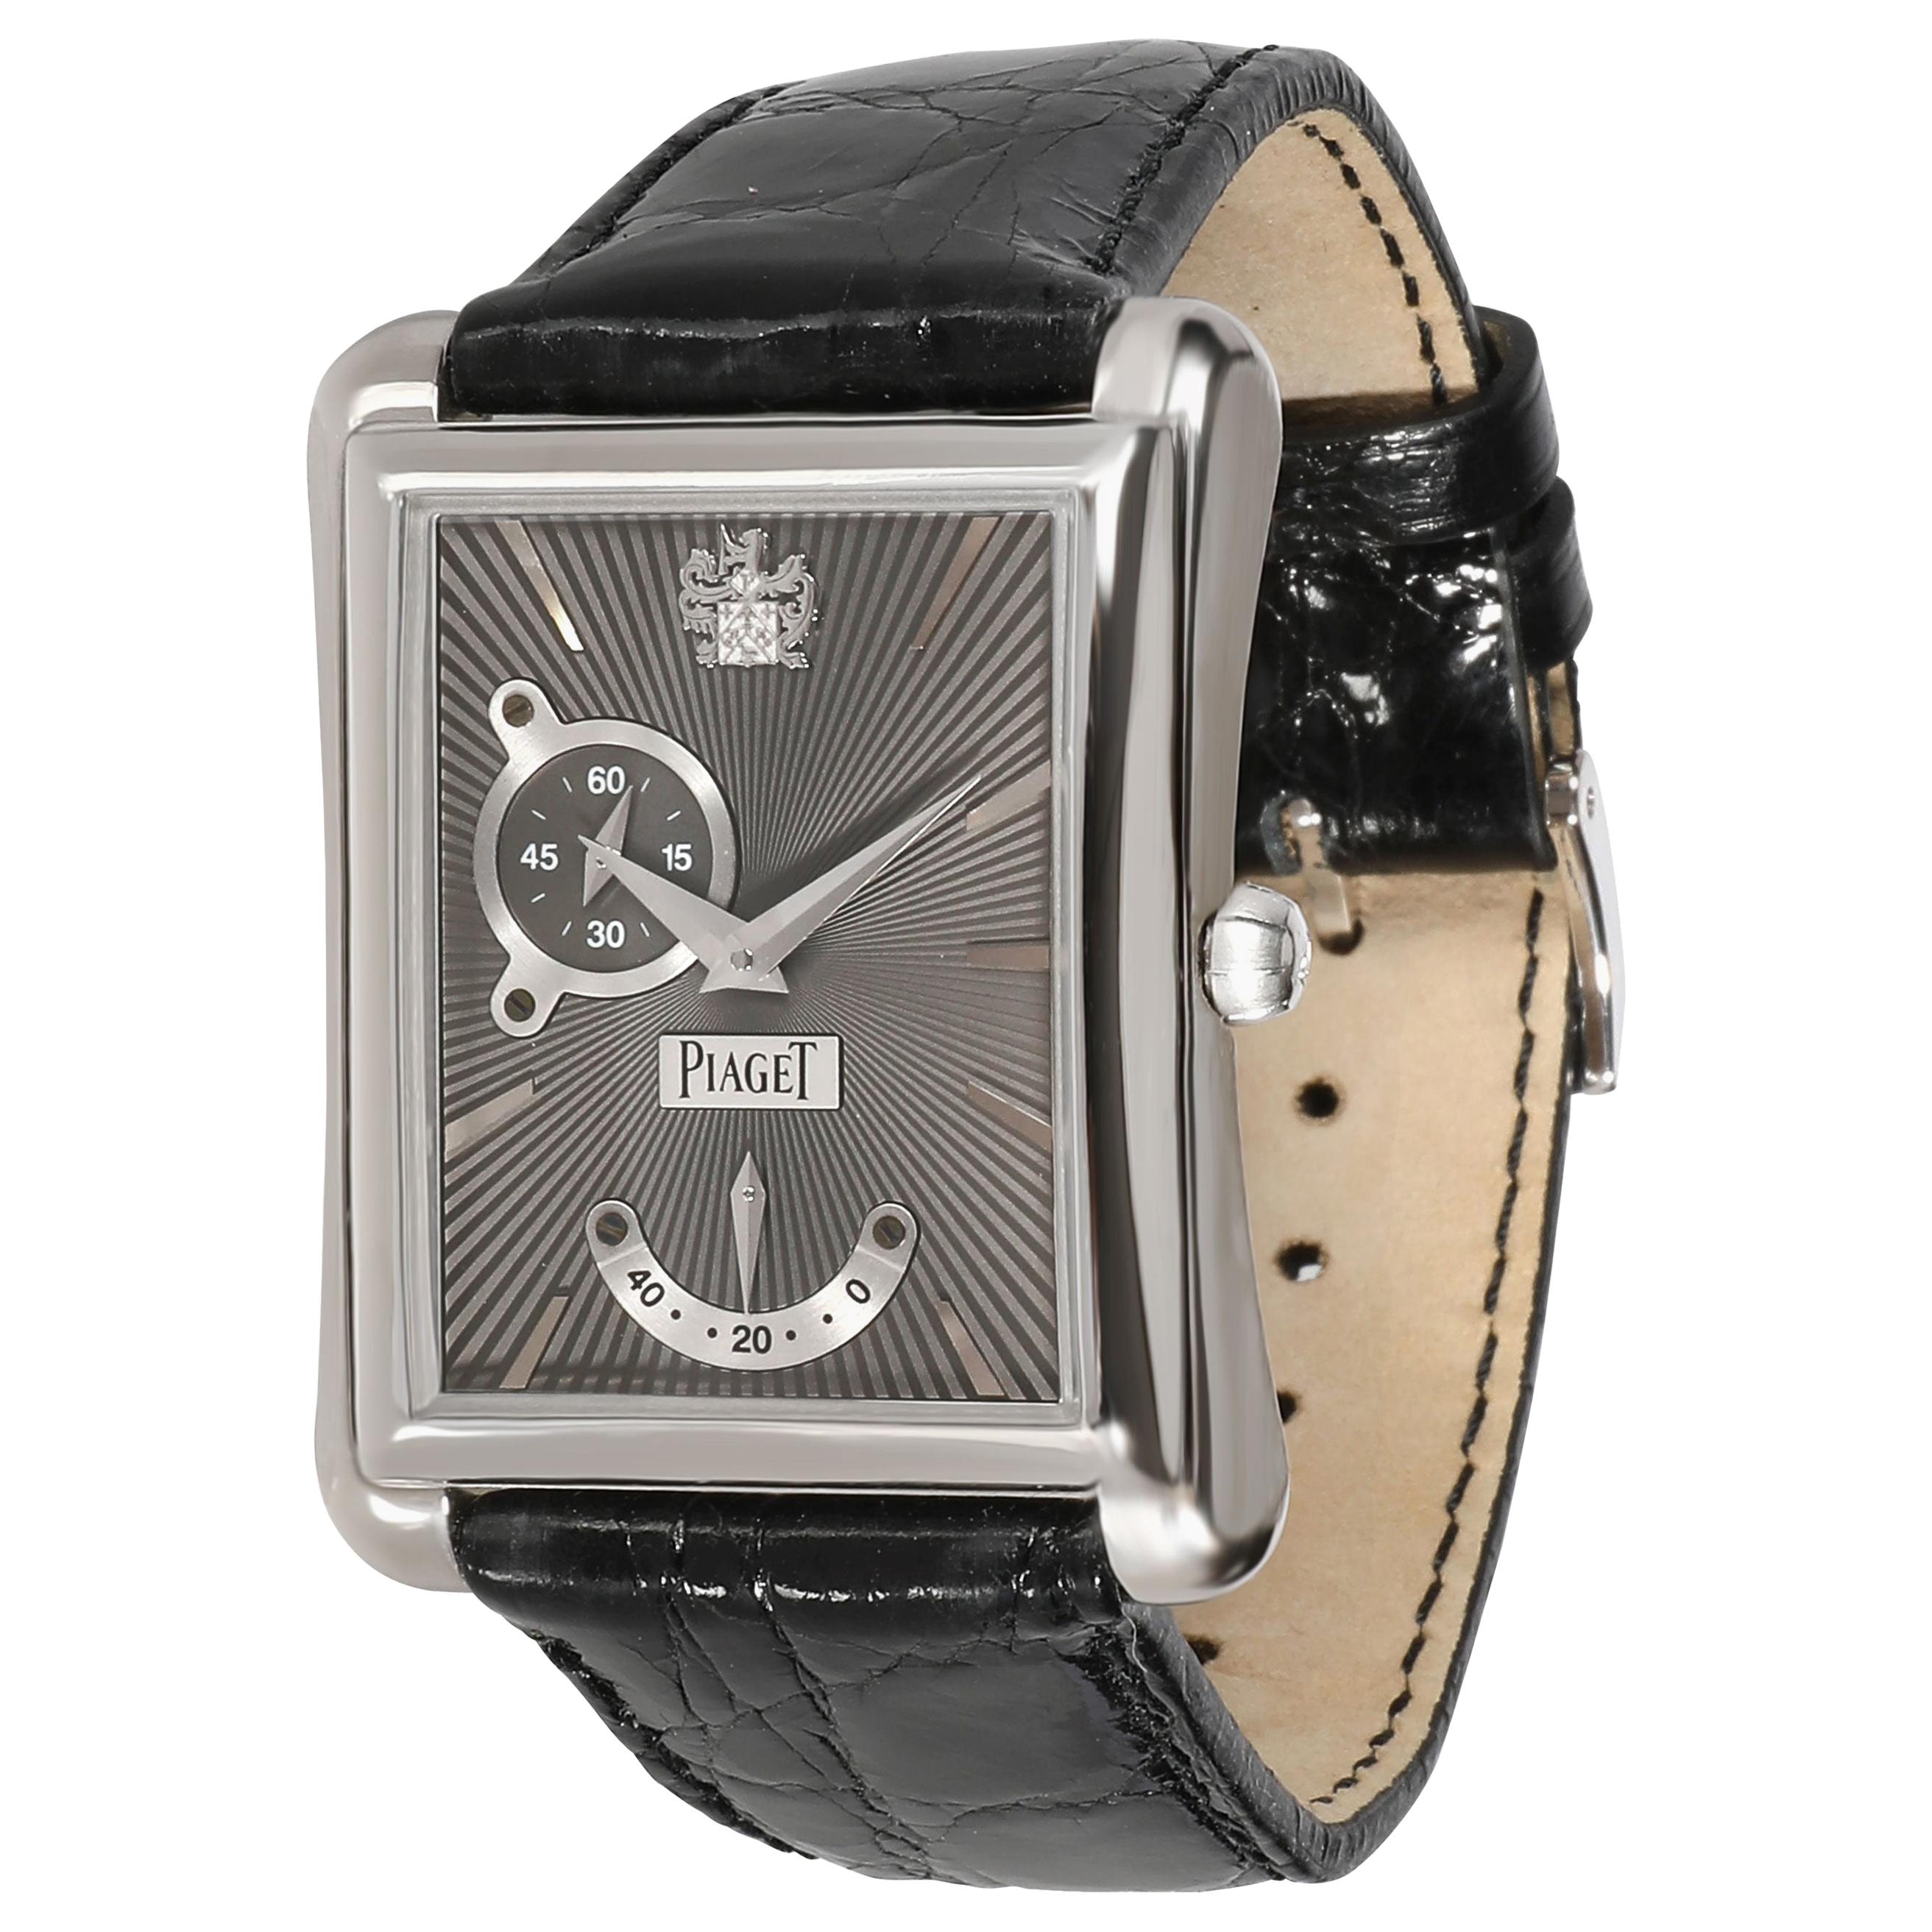 Piaget Emperador P10566 Men's Watch in 18 Karat White Gold